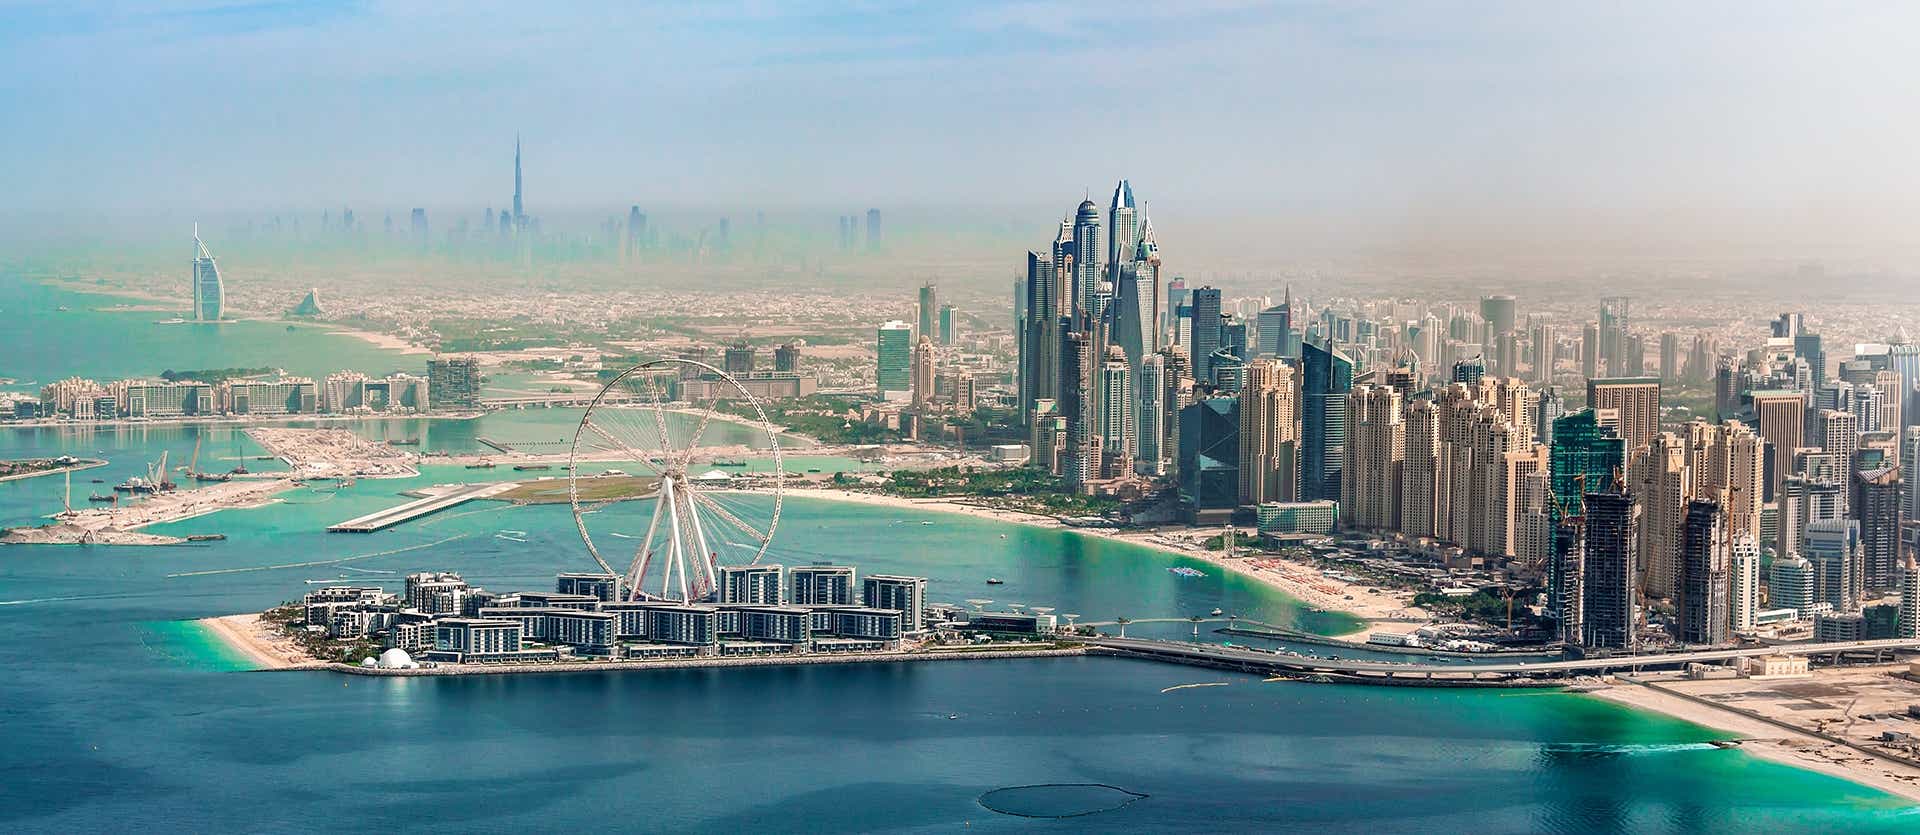 Dubai Port <span class="iconos separador"></span> Dubai <span class="iconos separador"></span> United Arab Emirates